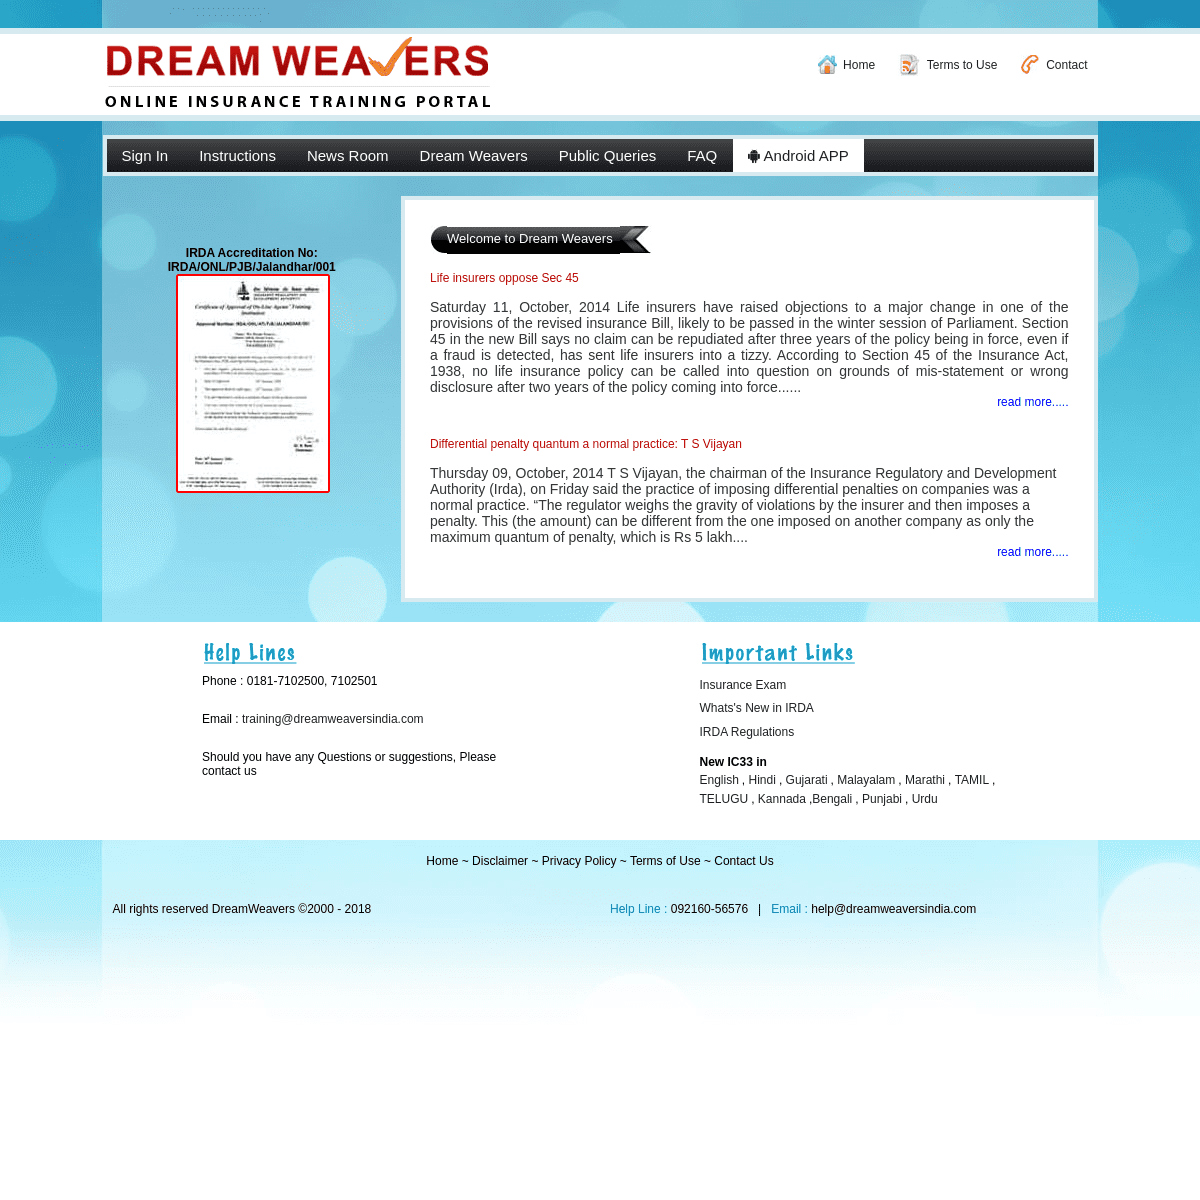 A complete backup of dreamweaversindia.com